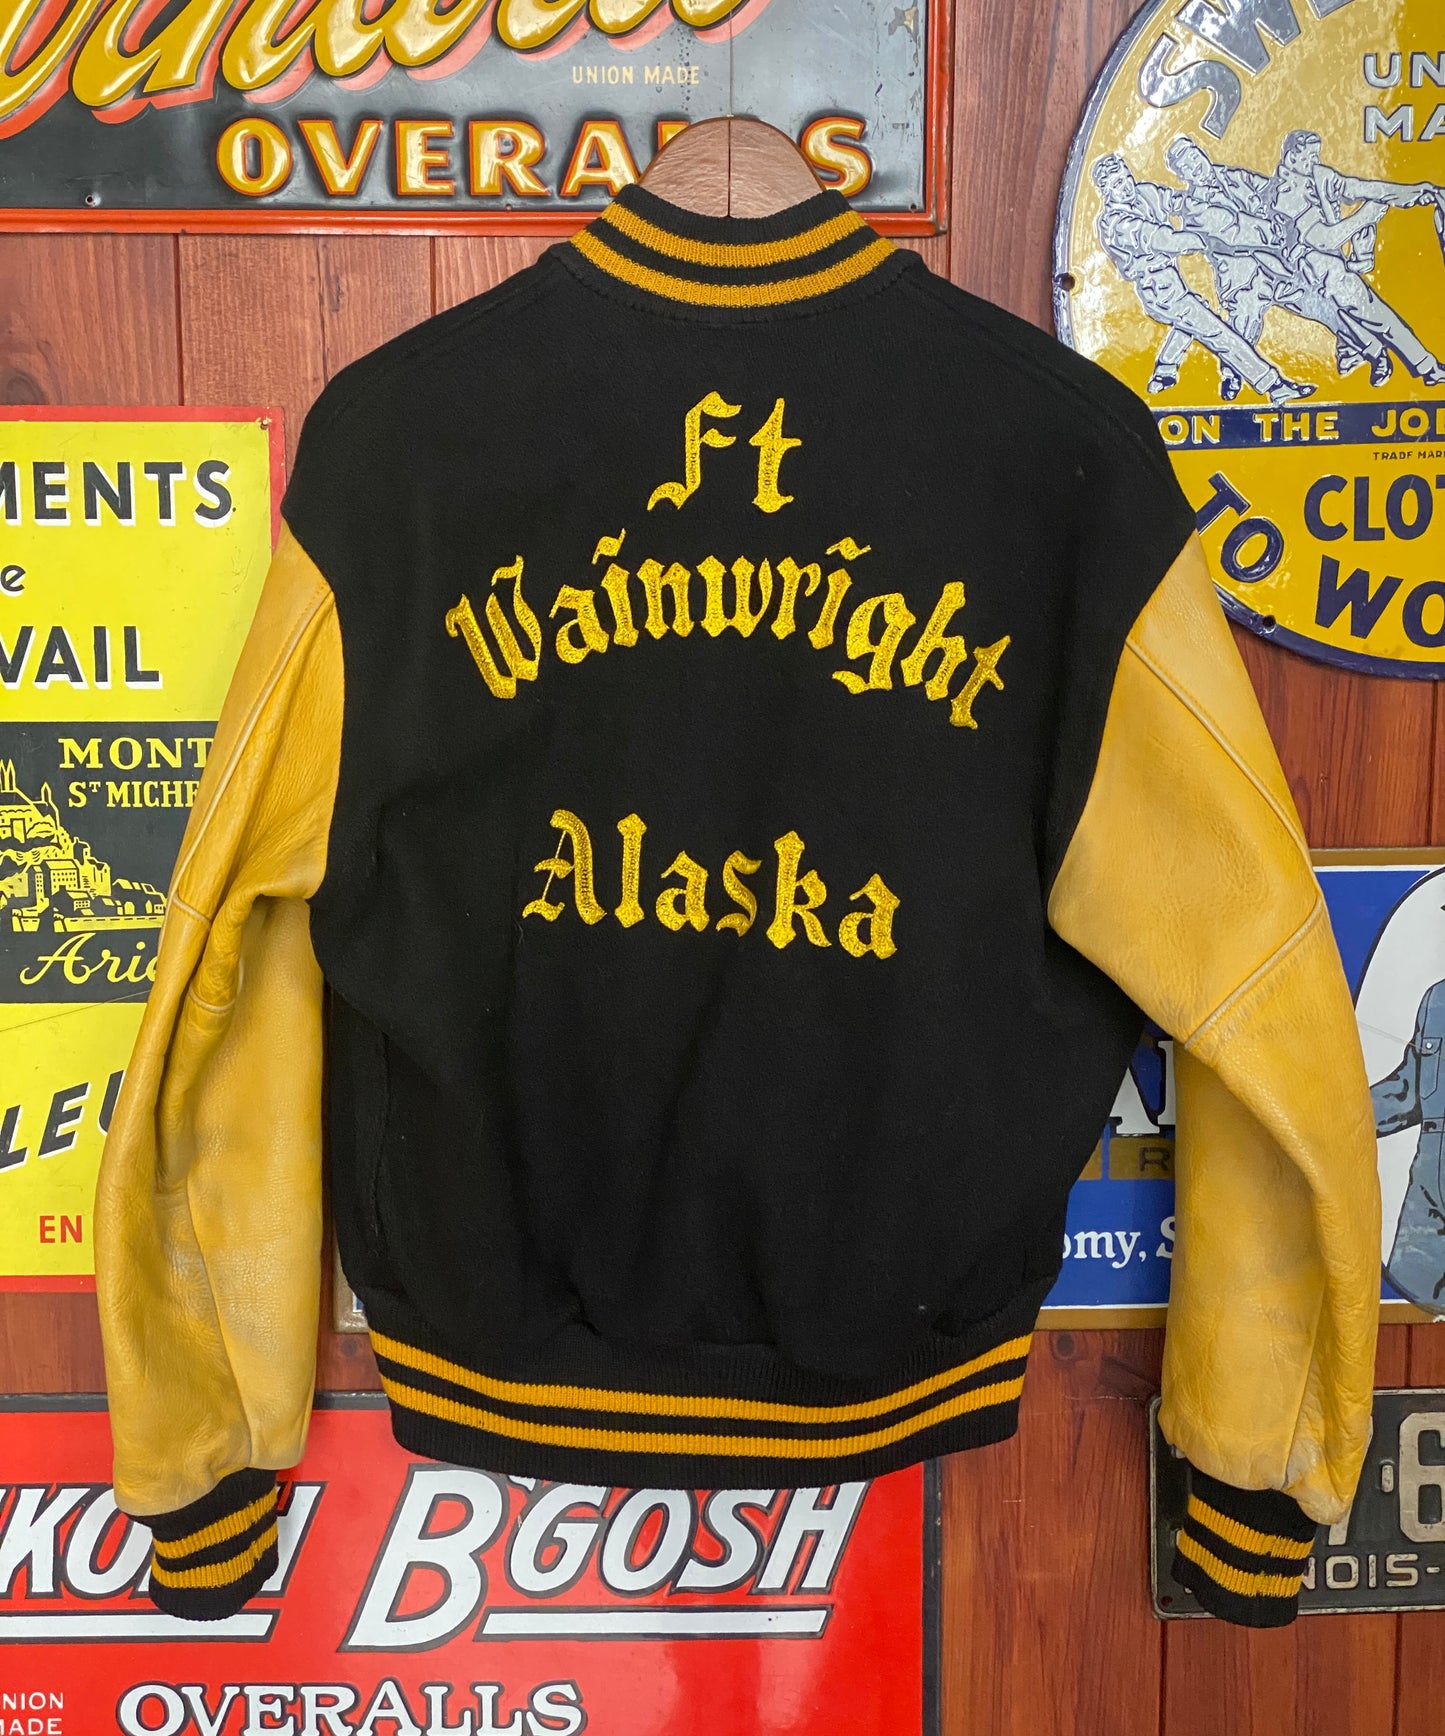 Vintage 1964 varsity jacket from Wainwright, Alaska, size 44 - back view.